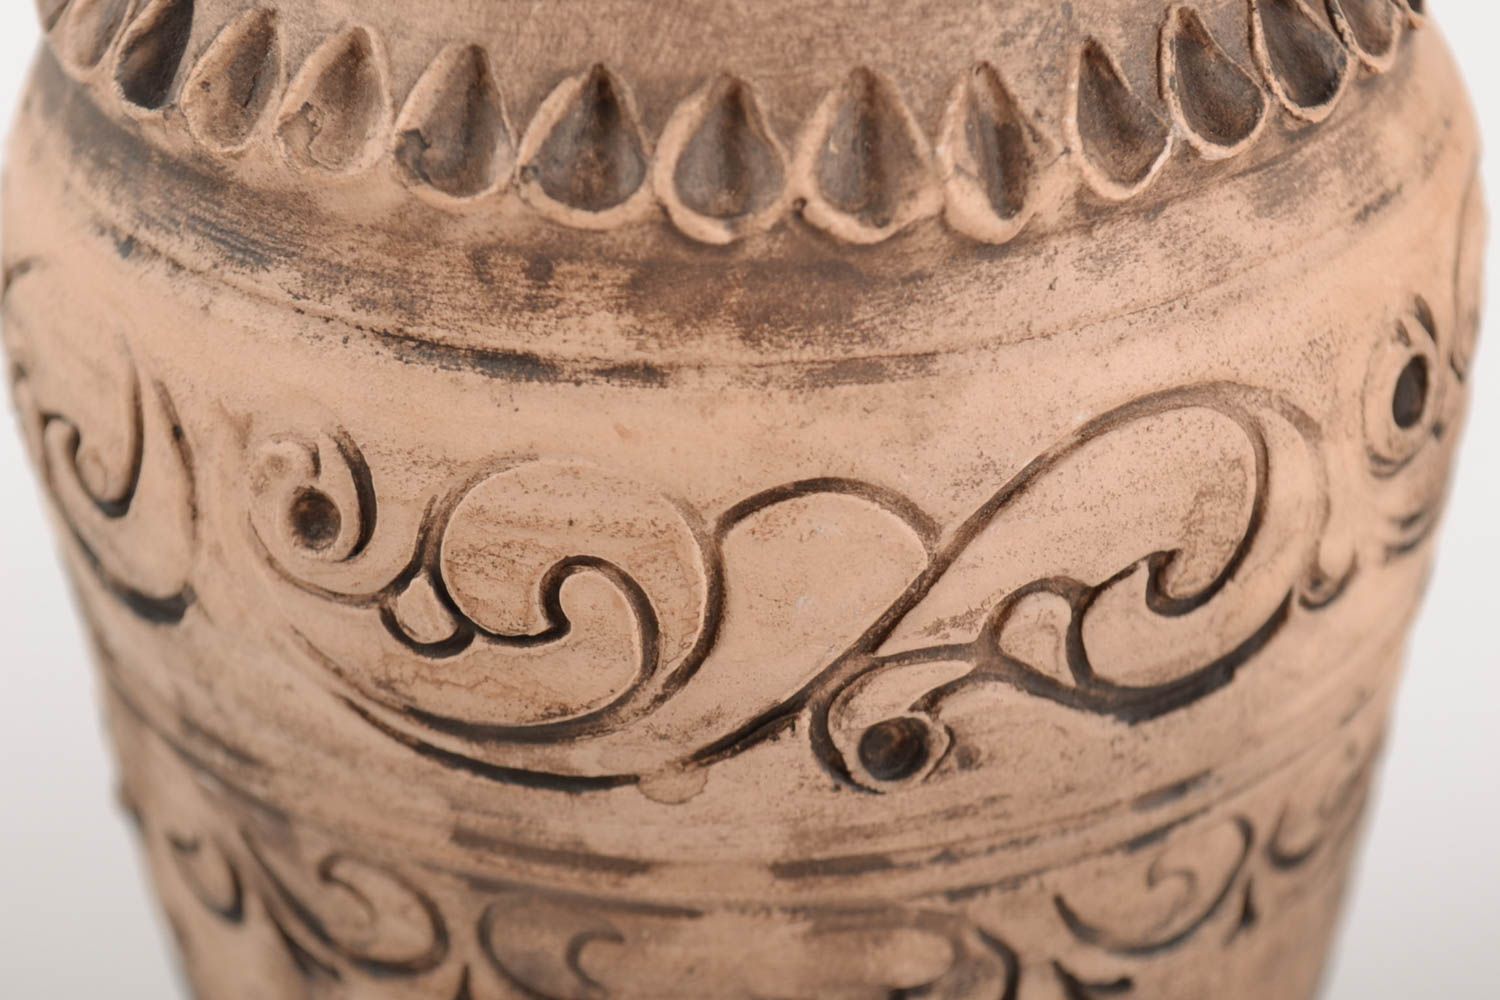 15 oz ceramic bottle shape ceramic pitcher carafe made of white clay 0,9 lb photo 2